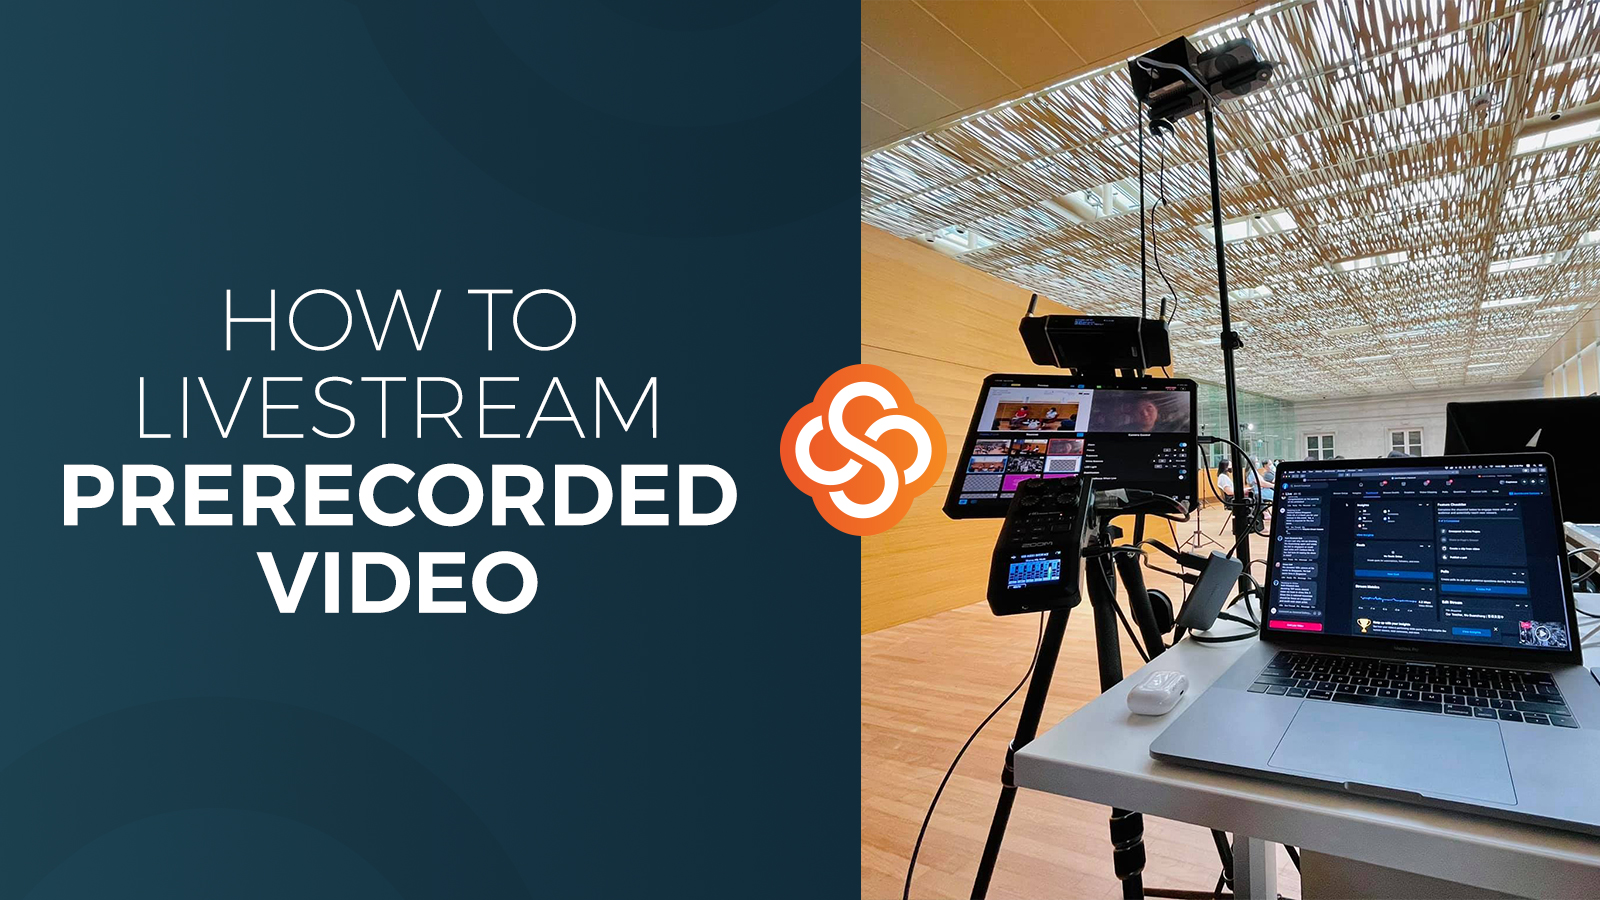 How to Livestream Prerecorded Video